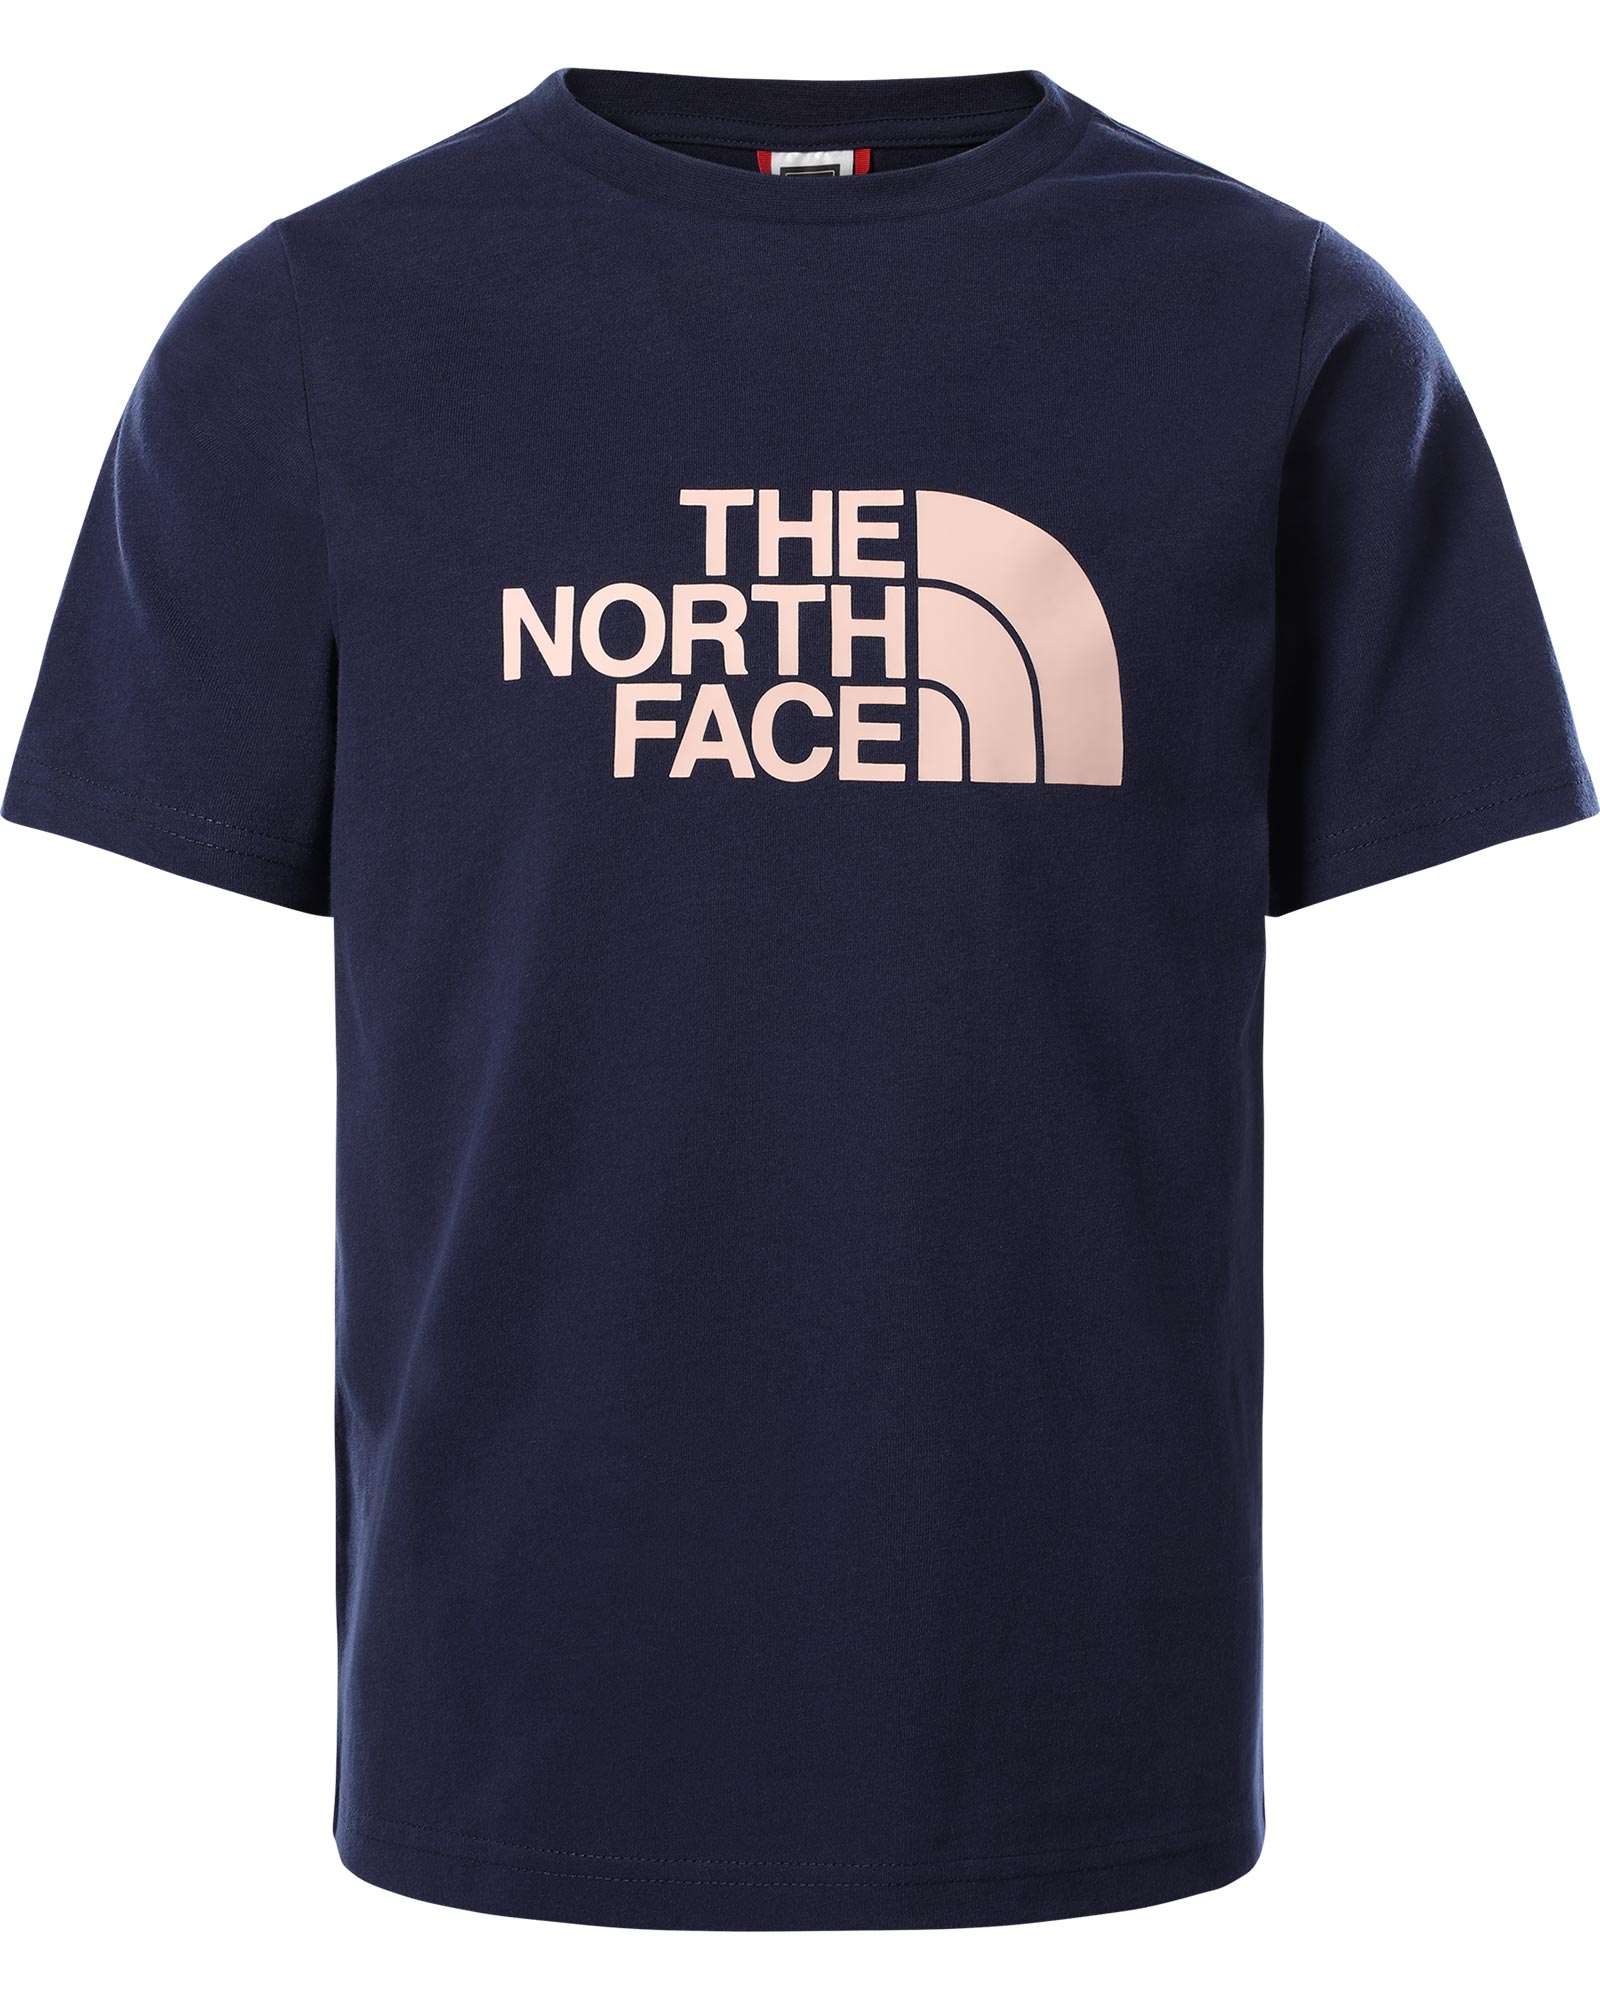 The North Face Easy Boyfriend Girls’ T Shirt - TNF Navy S